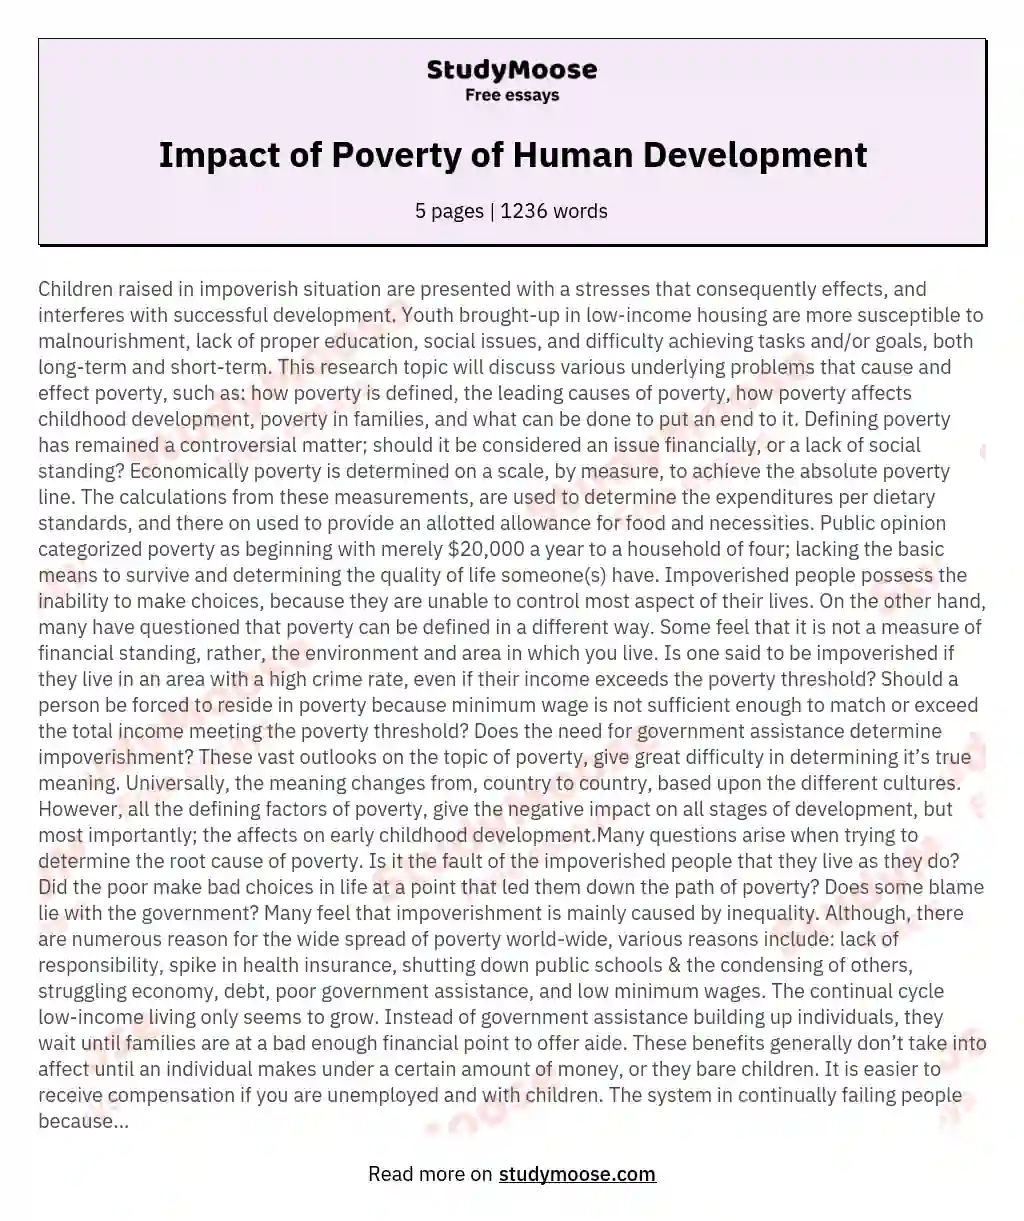 Impact of Poverty of Human Development essay